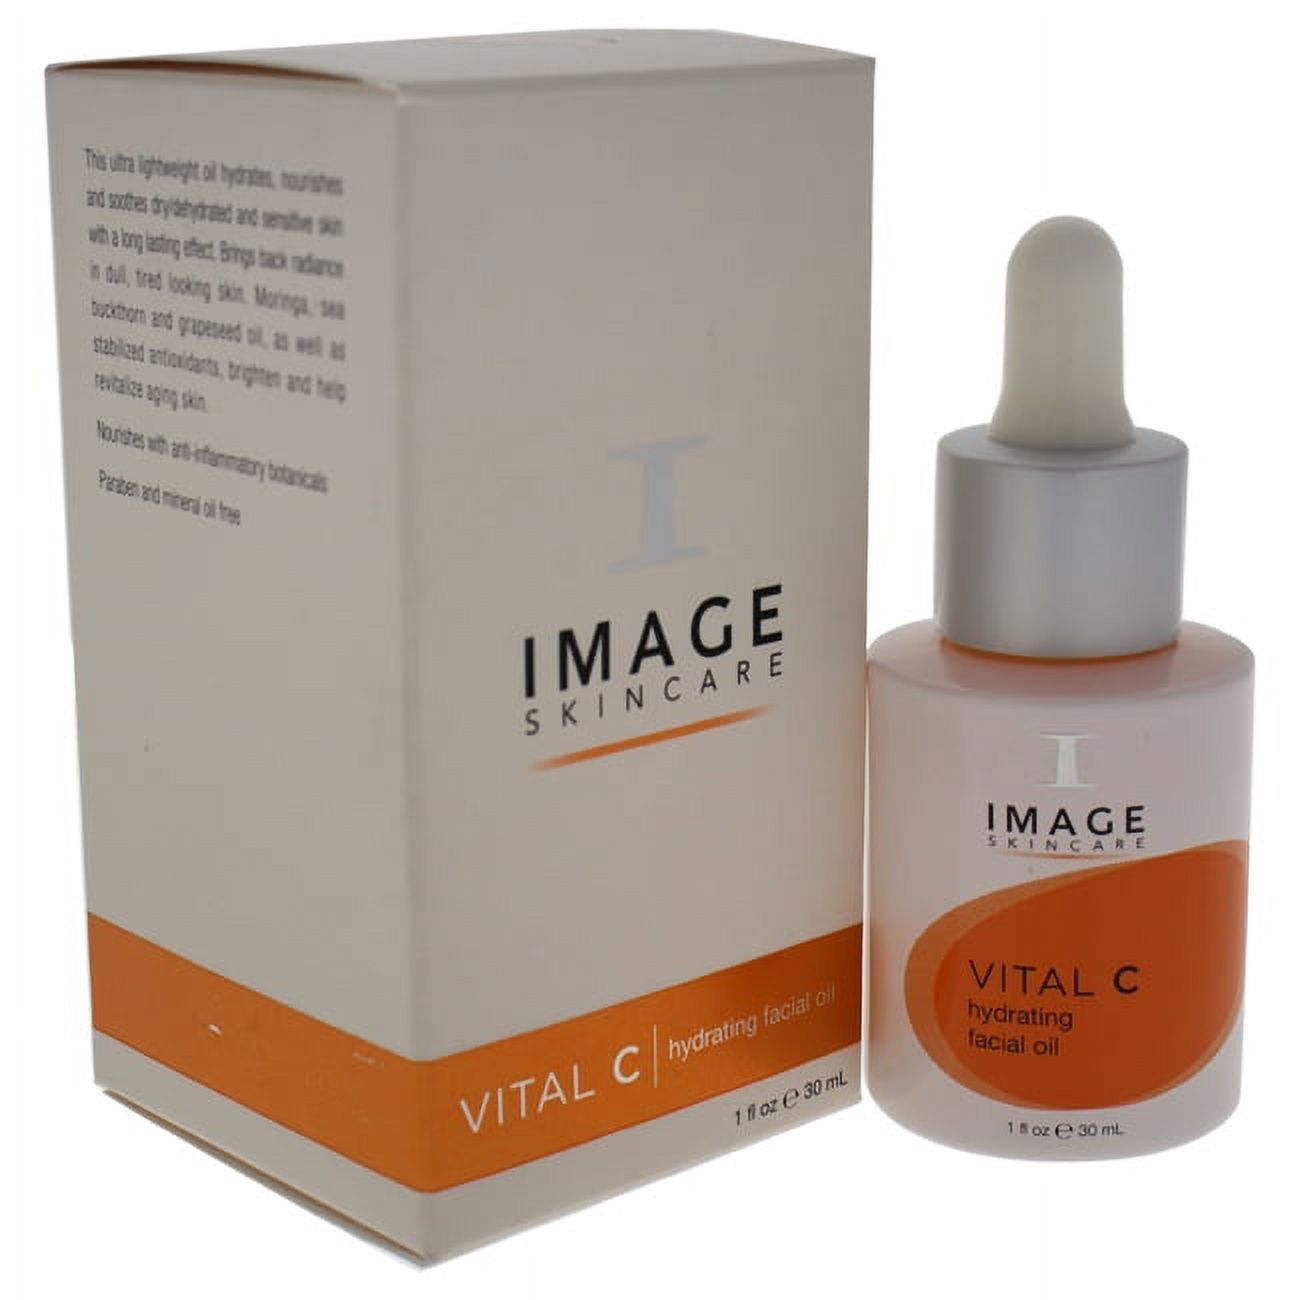 Image Skincare Vital C Hydrating Facial Oil 1oz - image 1 of 9